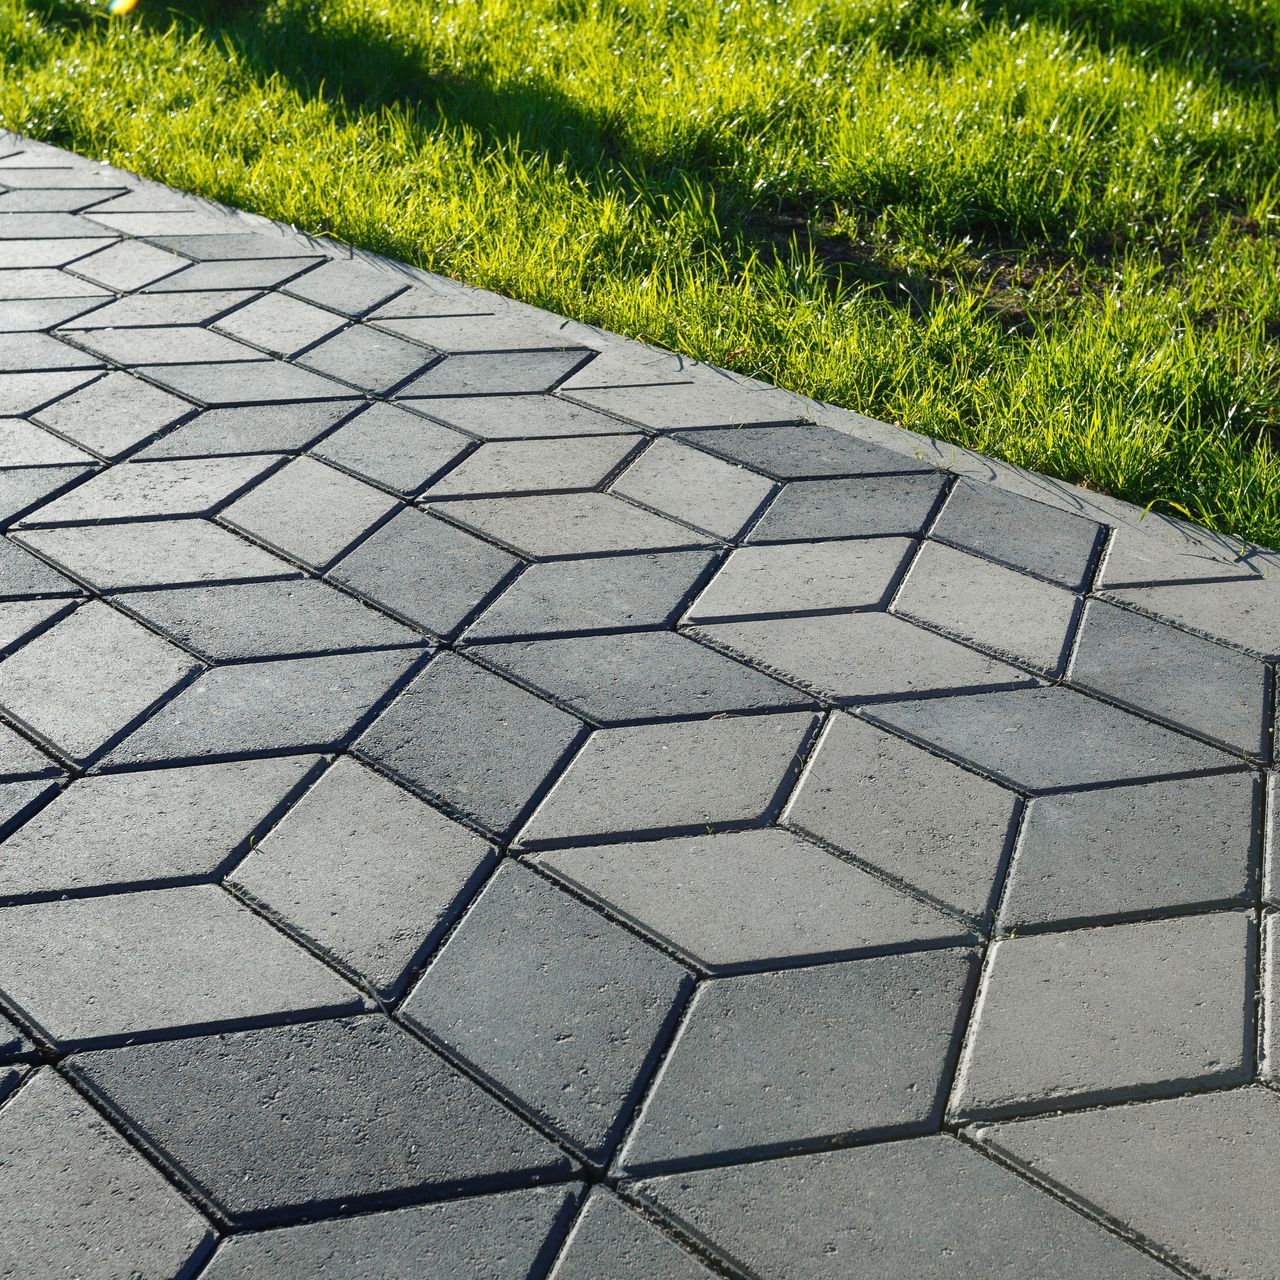 a brick walkway with a geometric pattern on it